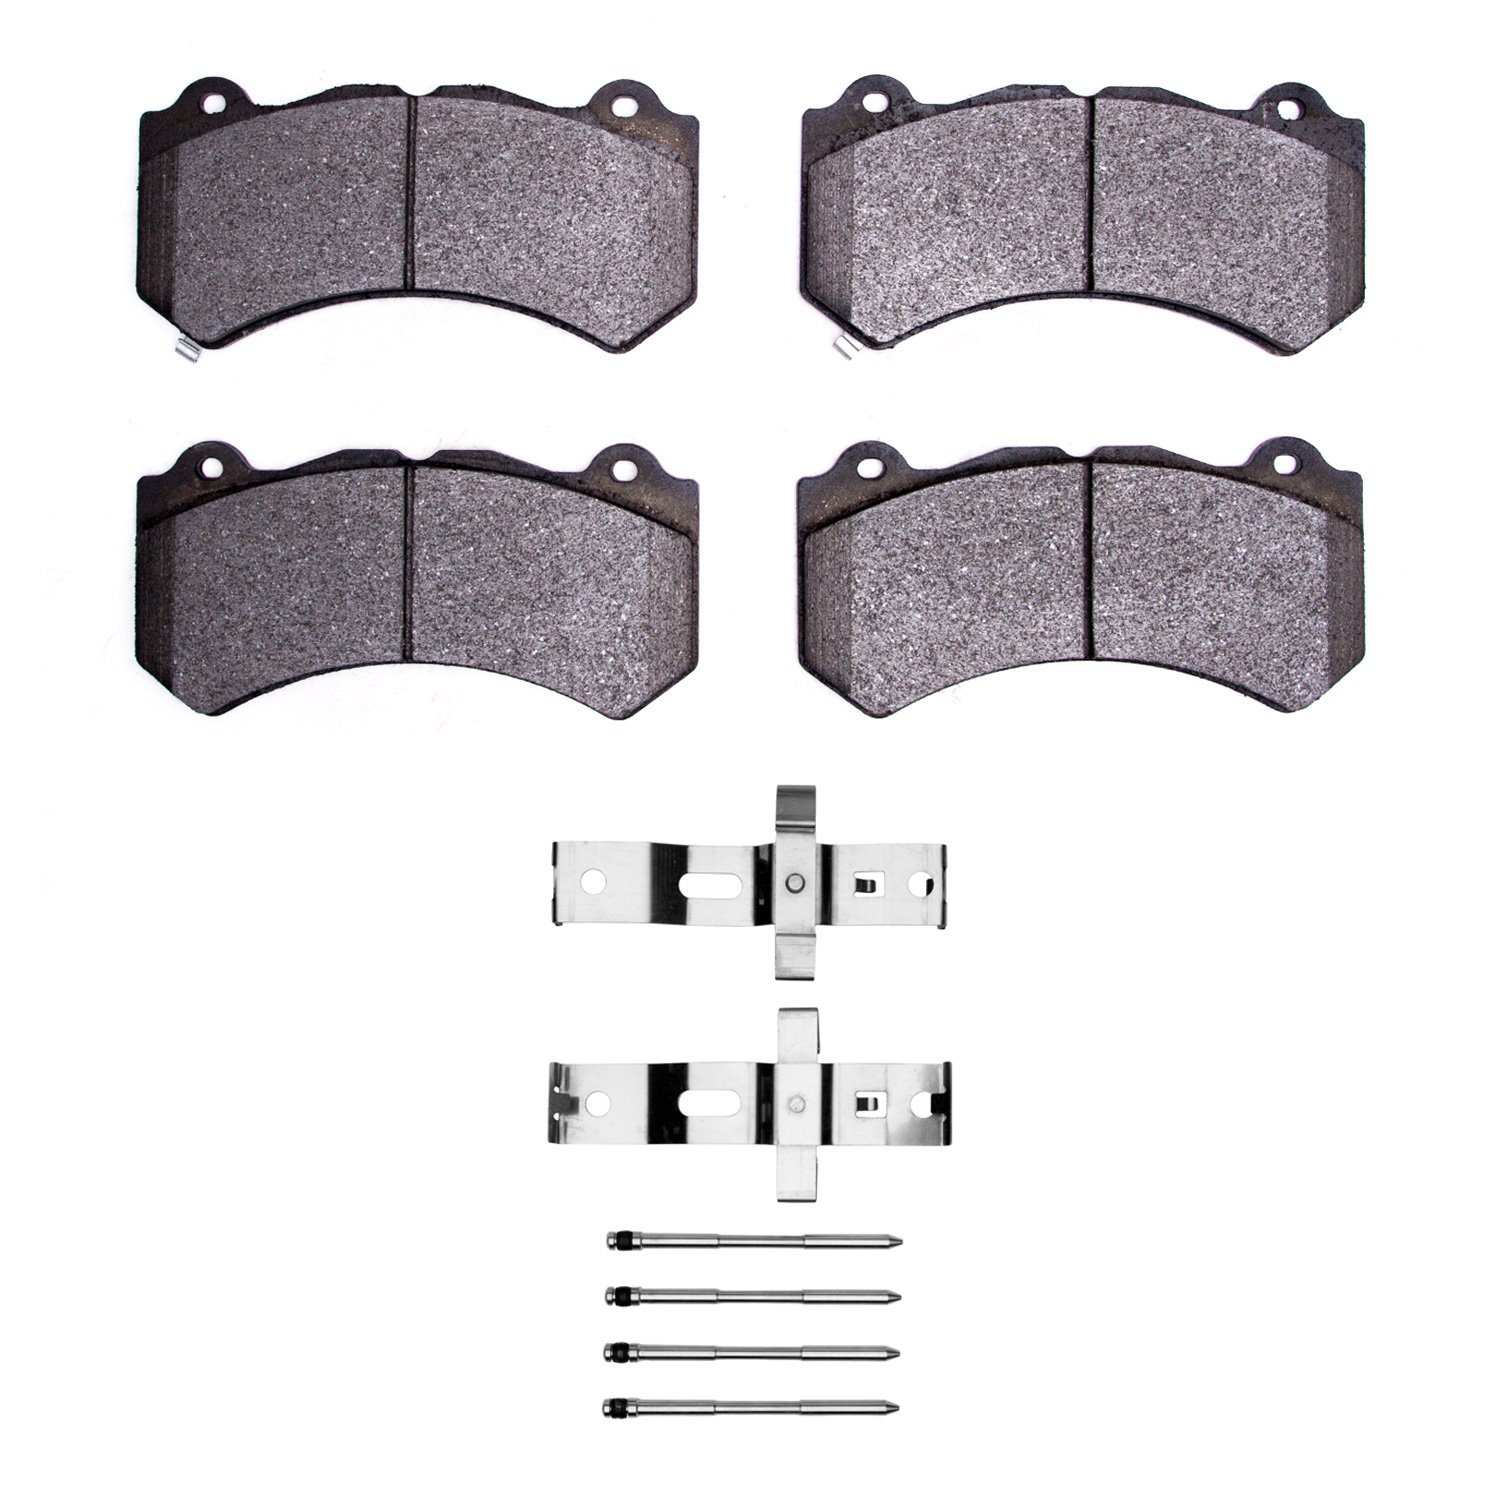 1551-1405-02 5000 Advanced Low-Metallic Brake Pads & Hardware Kit, Fits Select Mopar, Position: Front